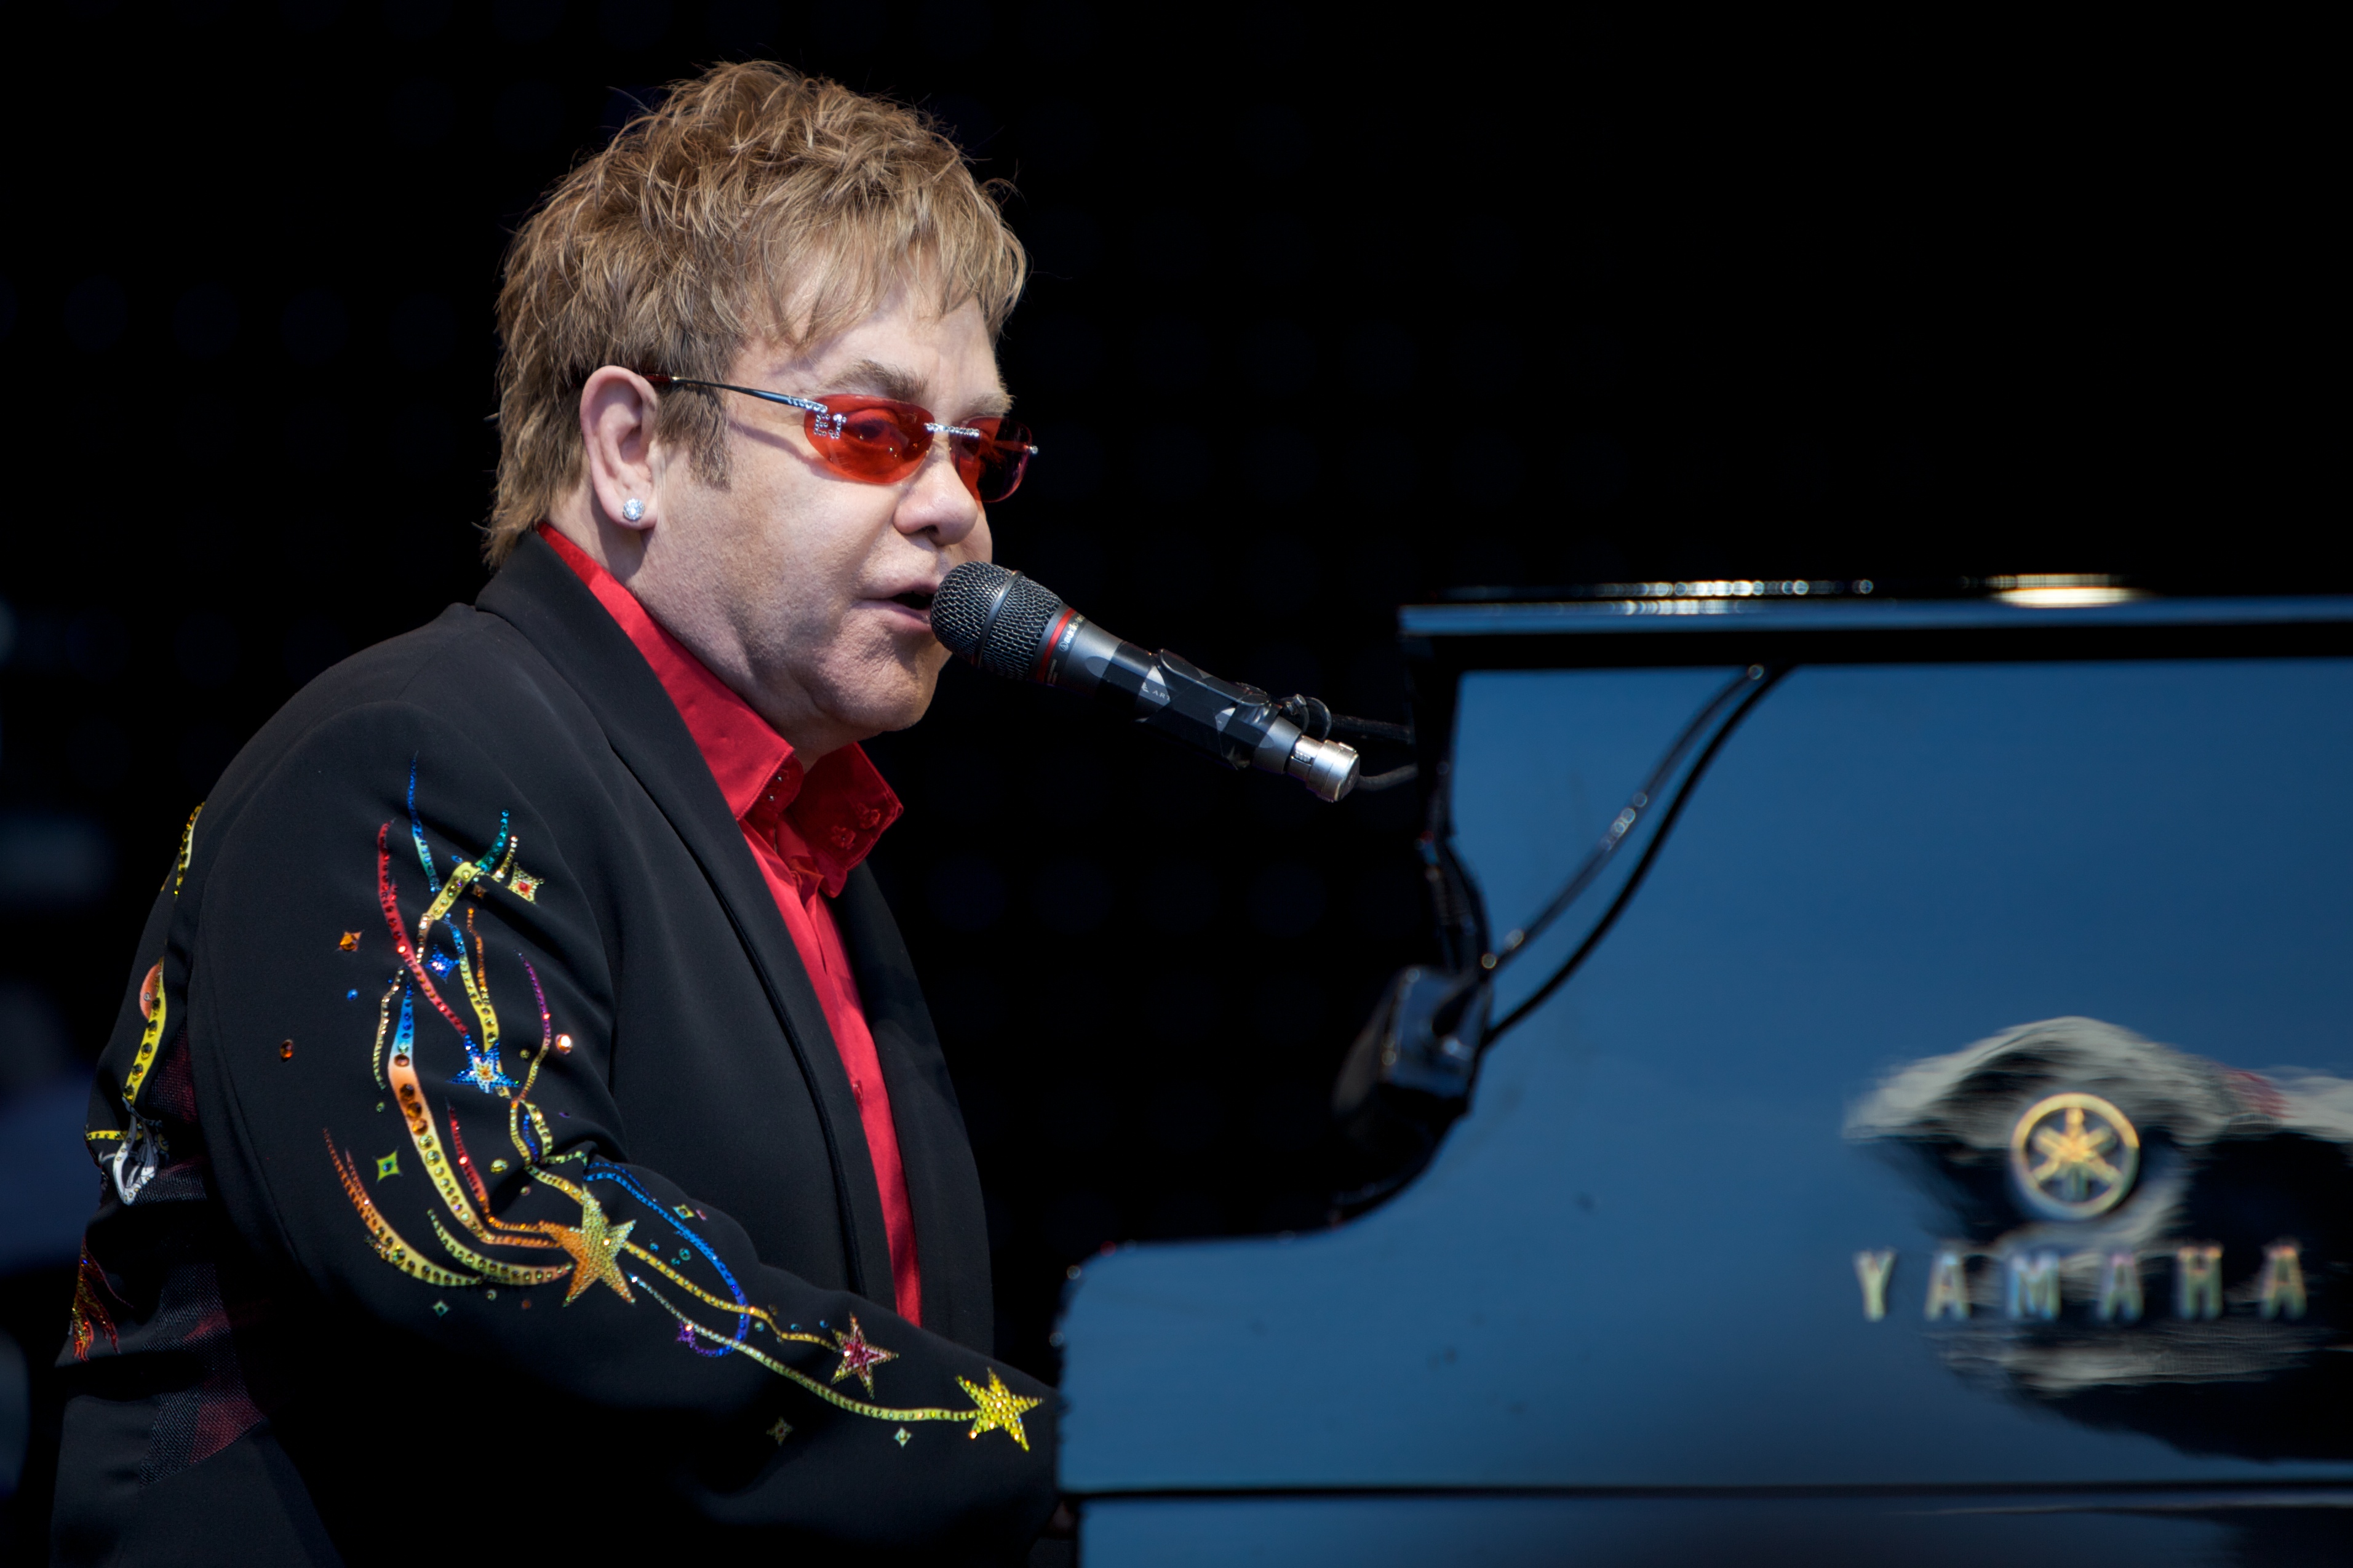 Elton John - iTunes Festival 2013 - London - Roundhouse - Hack4Life